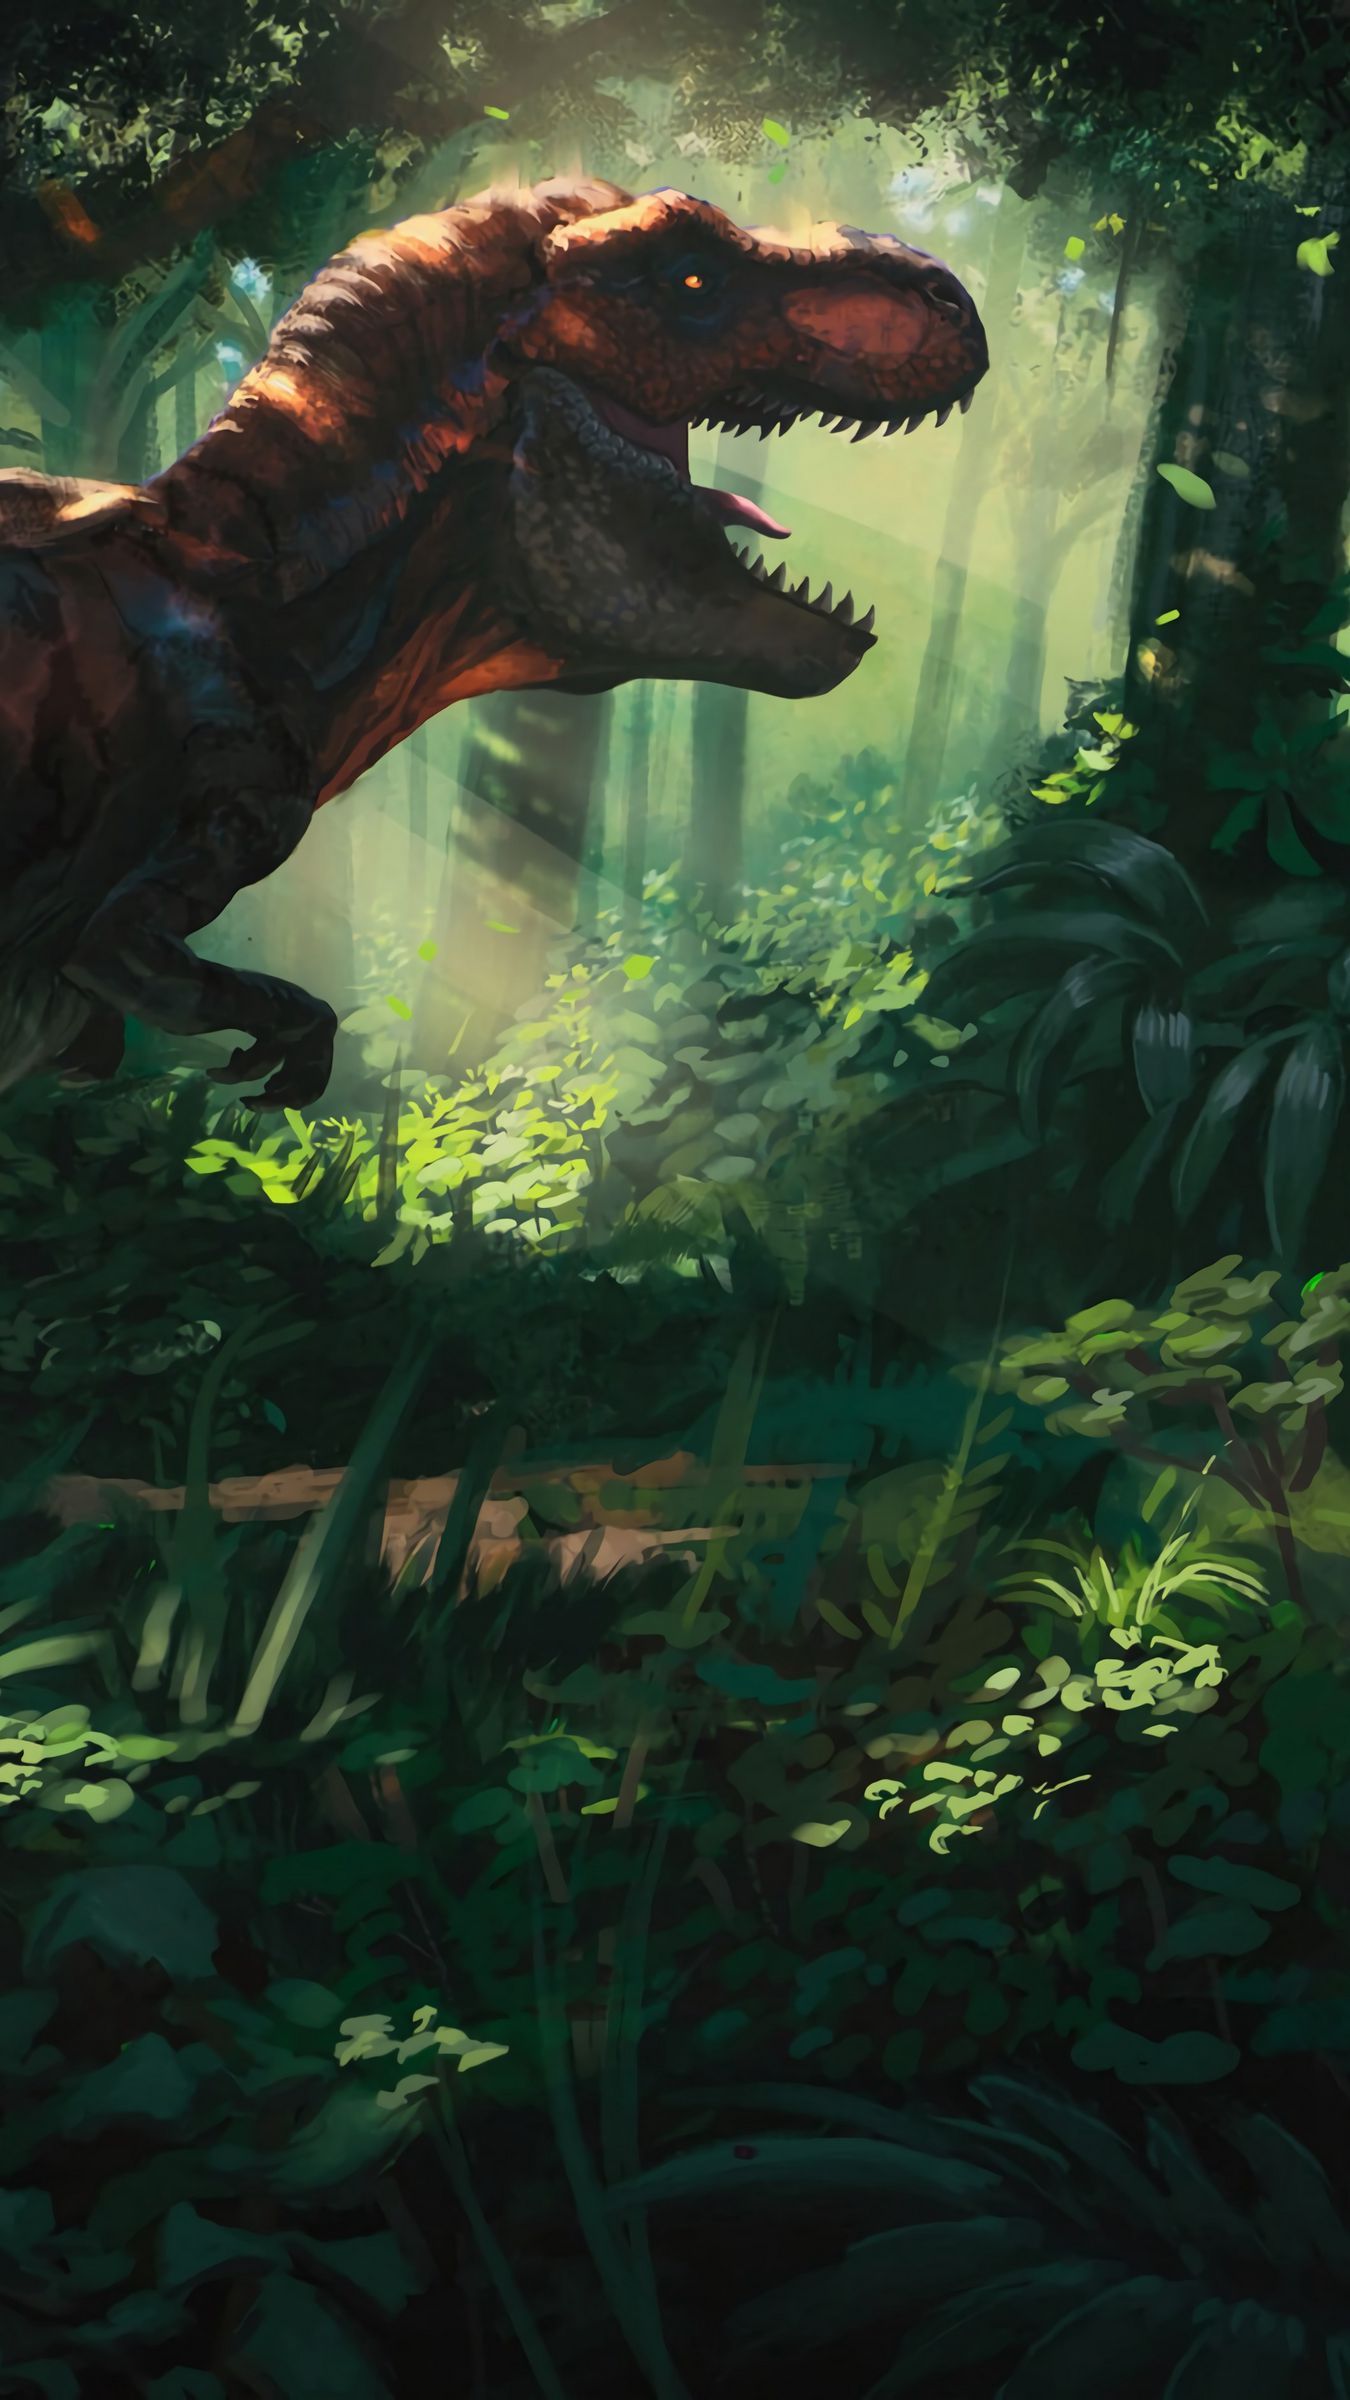 Download wallpaper 1350x2400 tyrannosaurus dinosaur jungle forest art  iphone 876s6 for parallax hd background